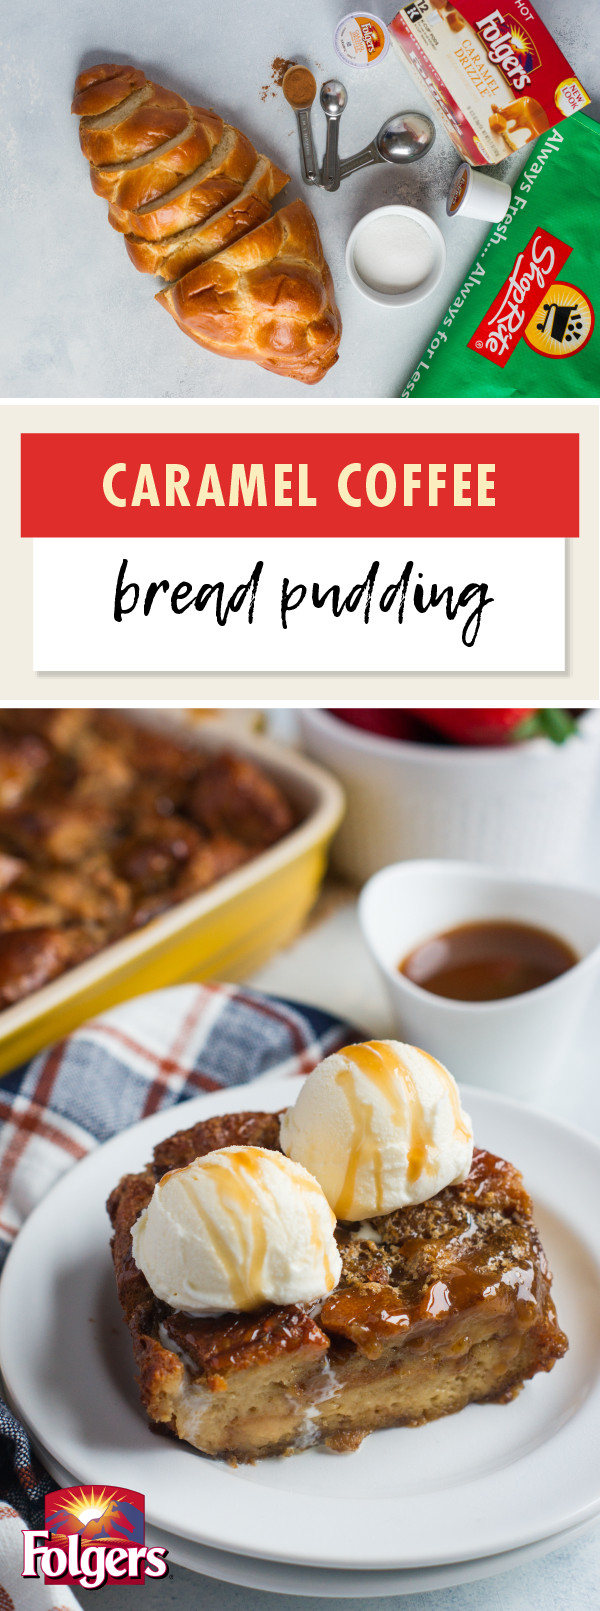 Gourmet Bread Pudding Recipe
 Caramel Coffee Bread Pudding Recipe